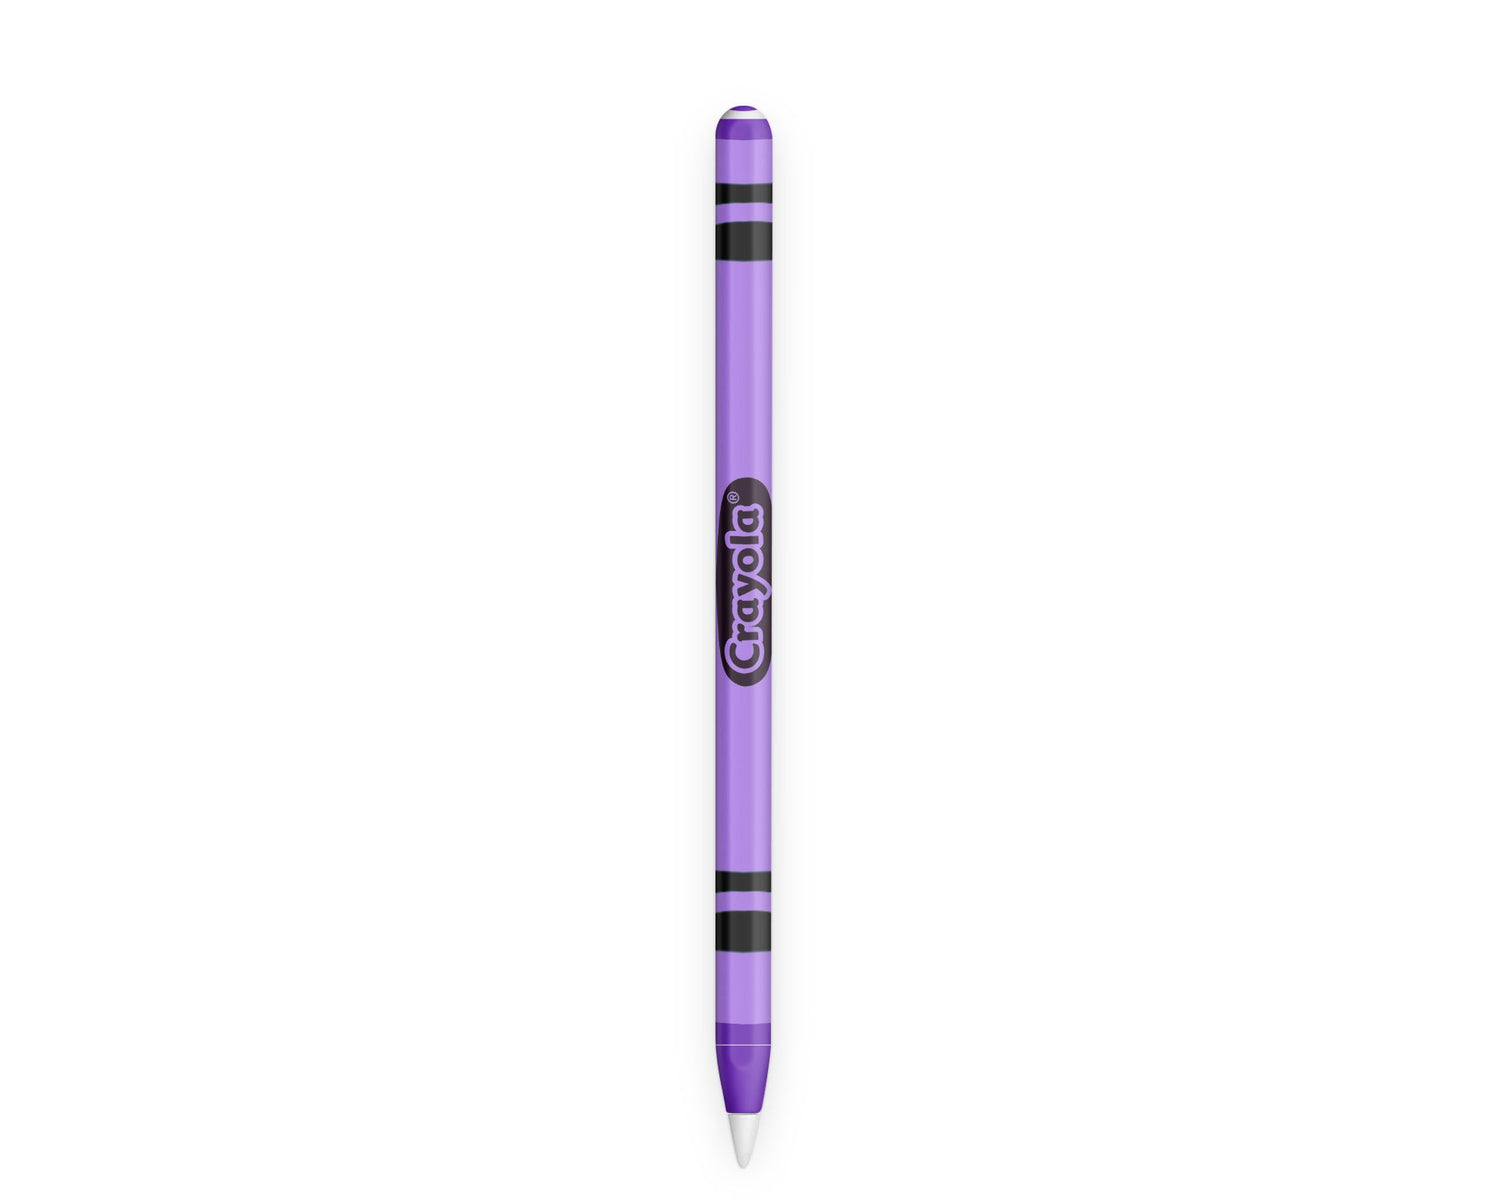 Lux Skins Apple Pencil Crayloa Violet 2nd Generation Skins - Art Crayola Series Skin